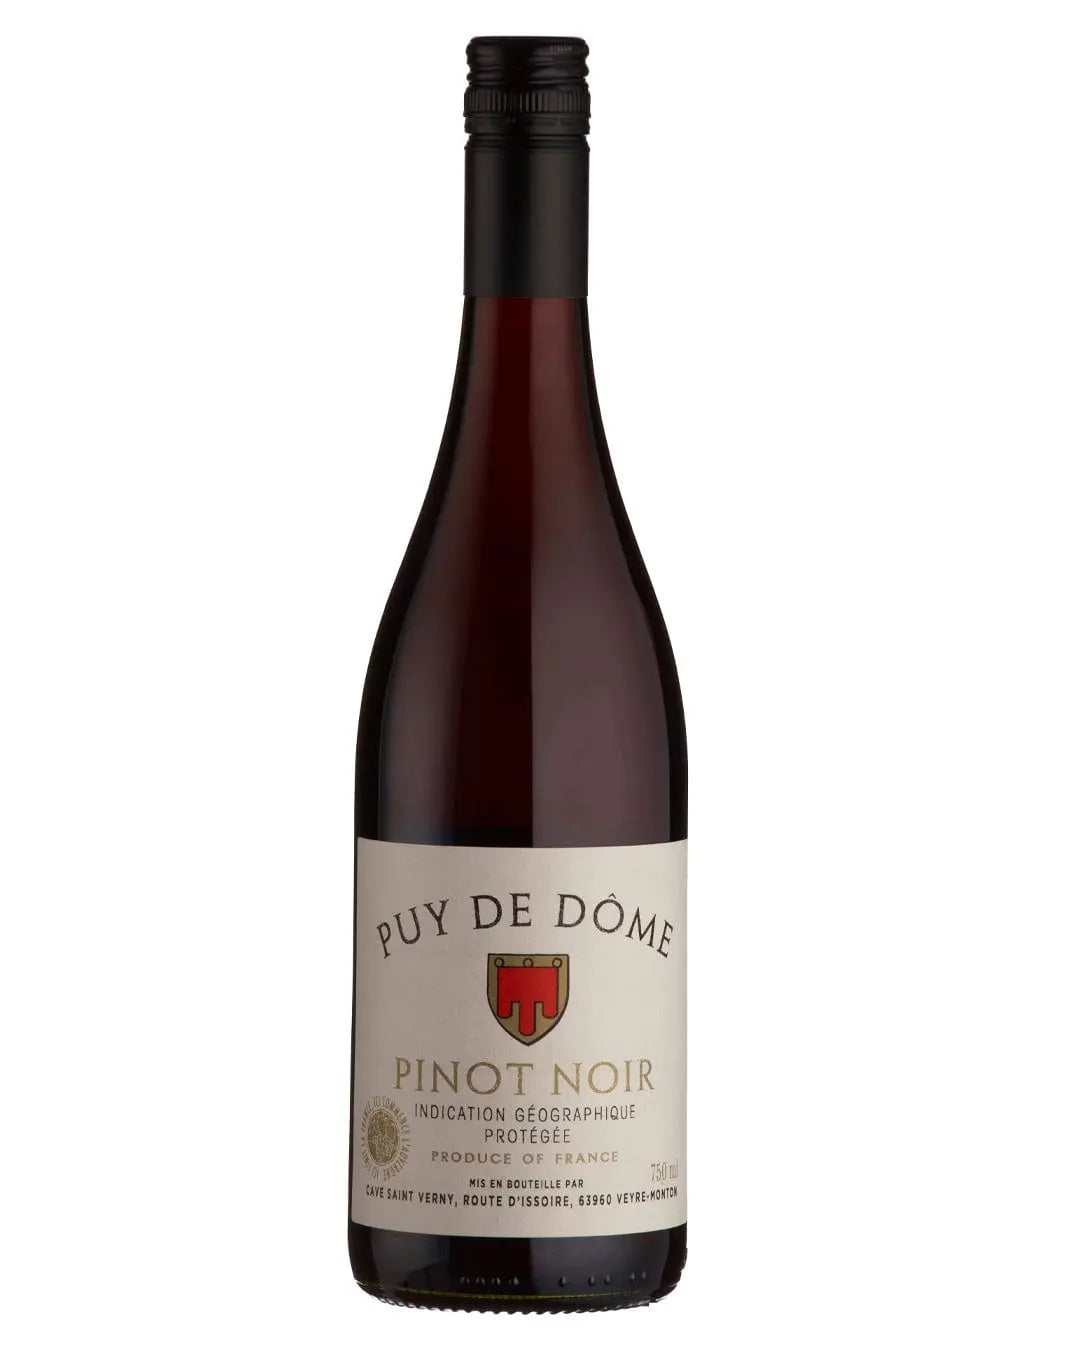 Cave St Verny Puy de Dome Pinot Noir 2019, 75 cl Red Wine